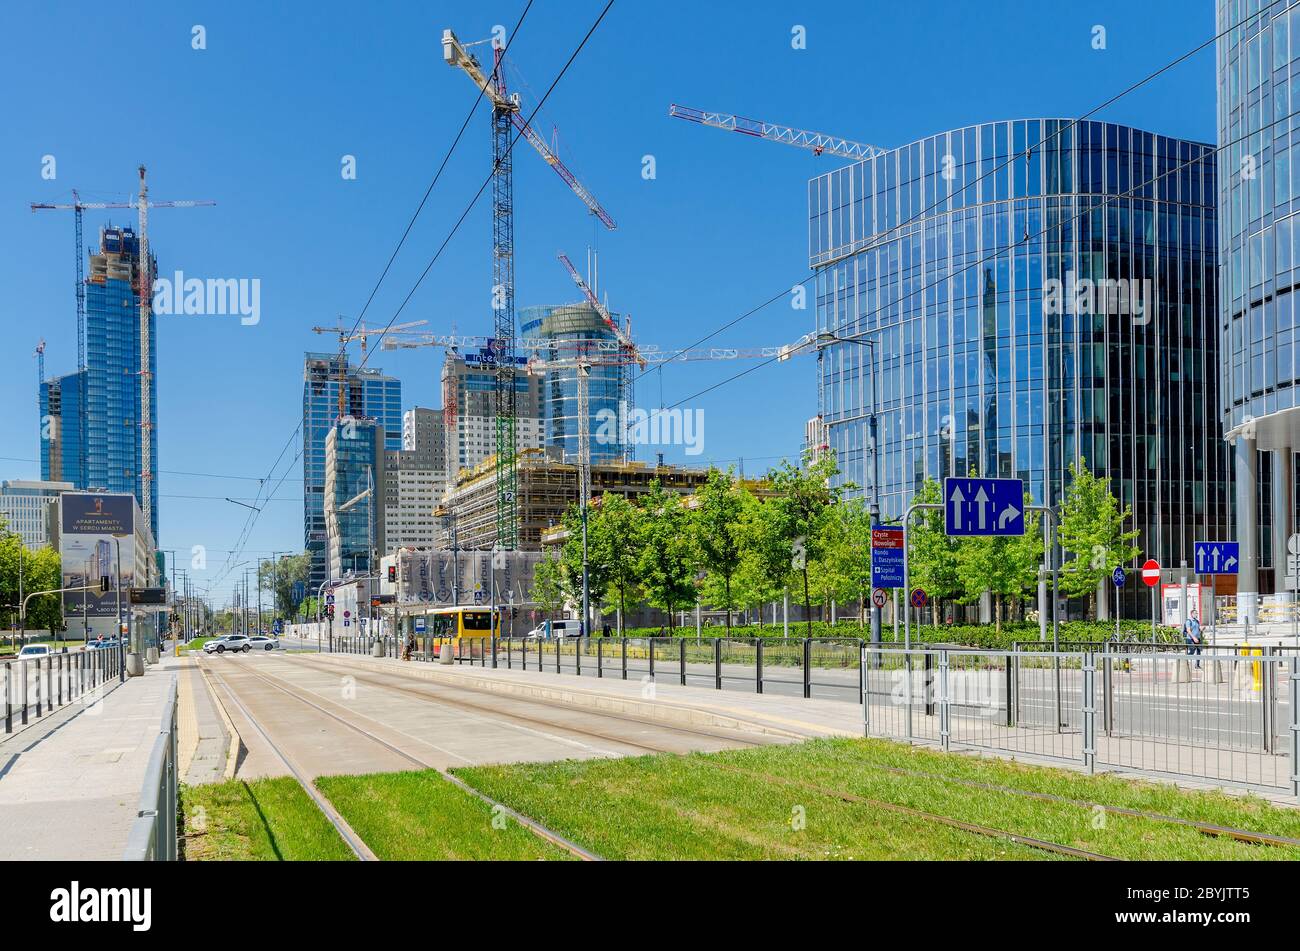 Warsaw, Mazovian province, Poland. Construction works in Wola district, Prosta street. Stock Photo